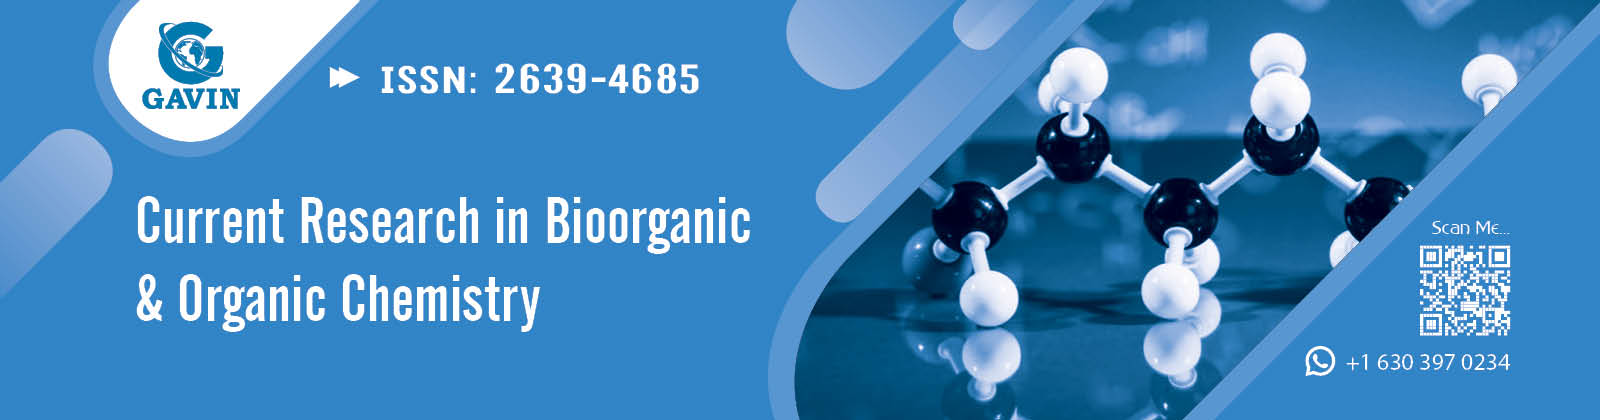 Current Research in Bioorganic & Organic Chemistry